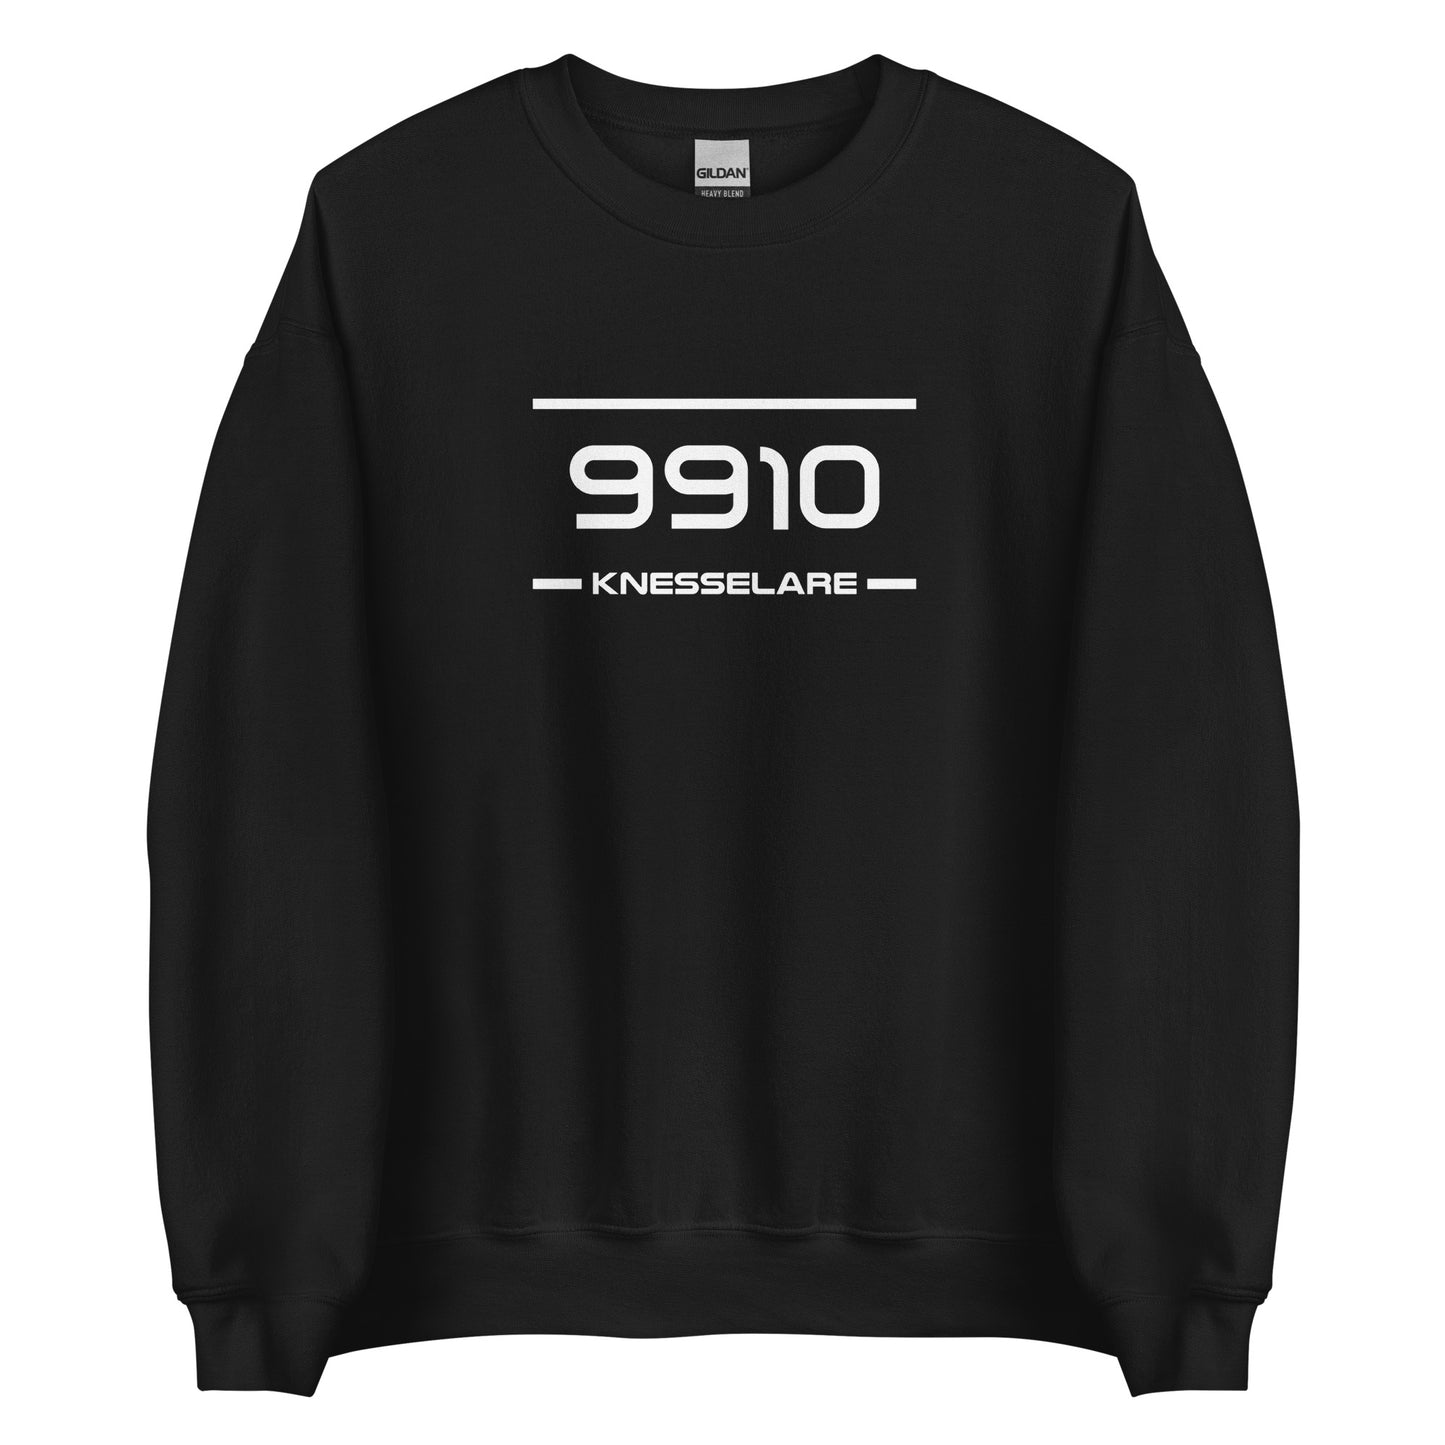 Sweater - 9910 - Knesselare (M/V)